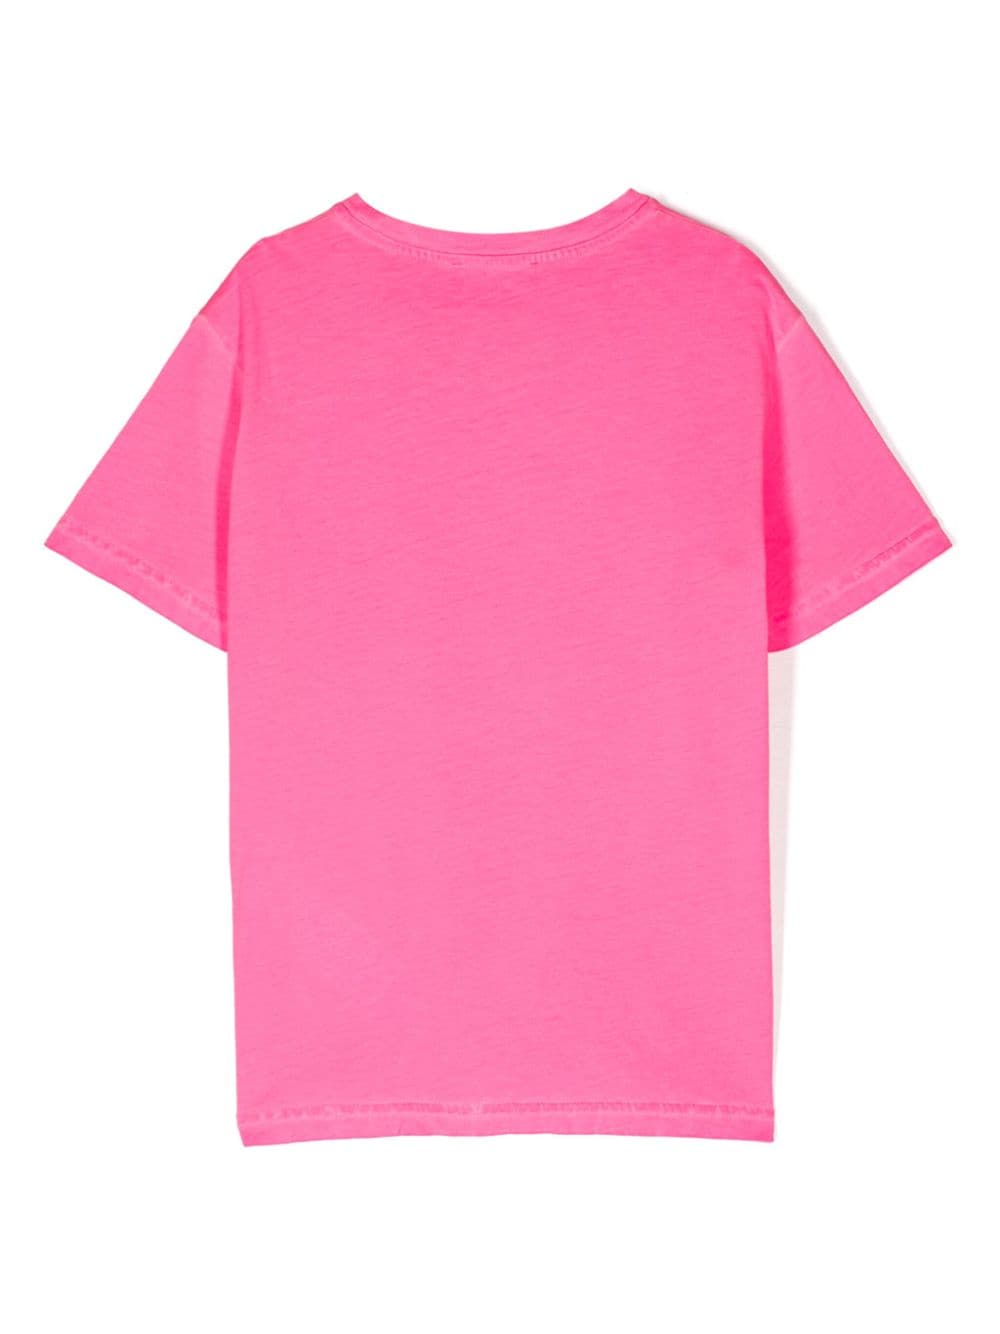 T-shirt rose fille